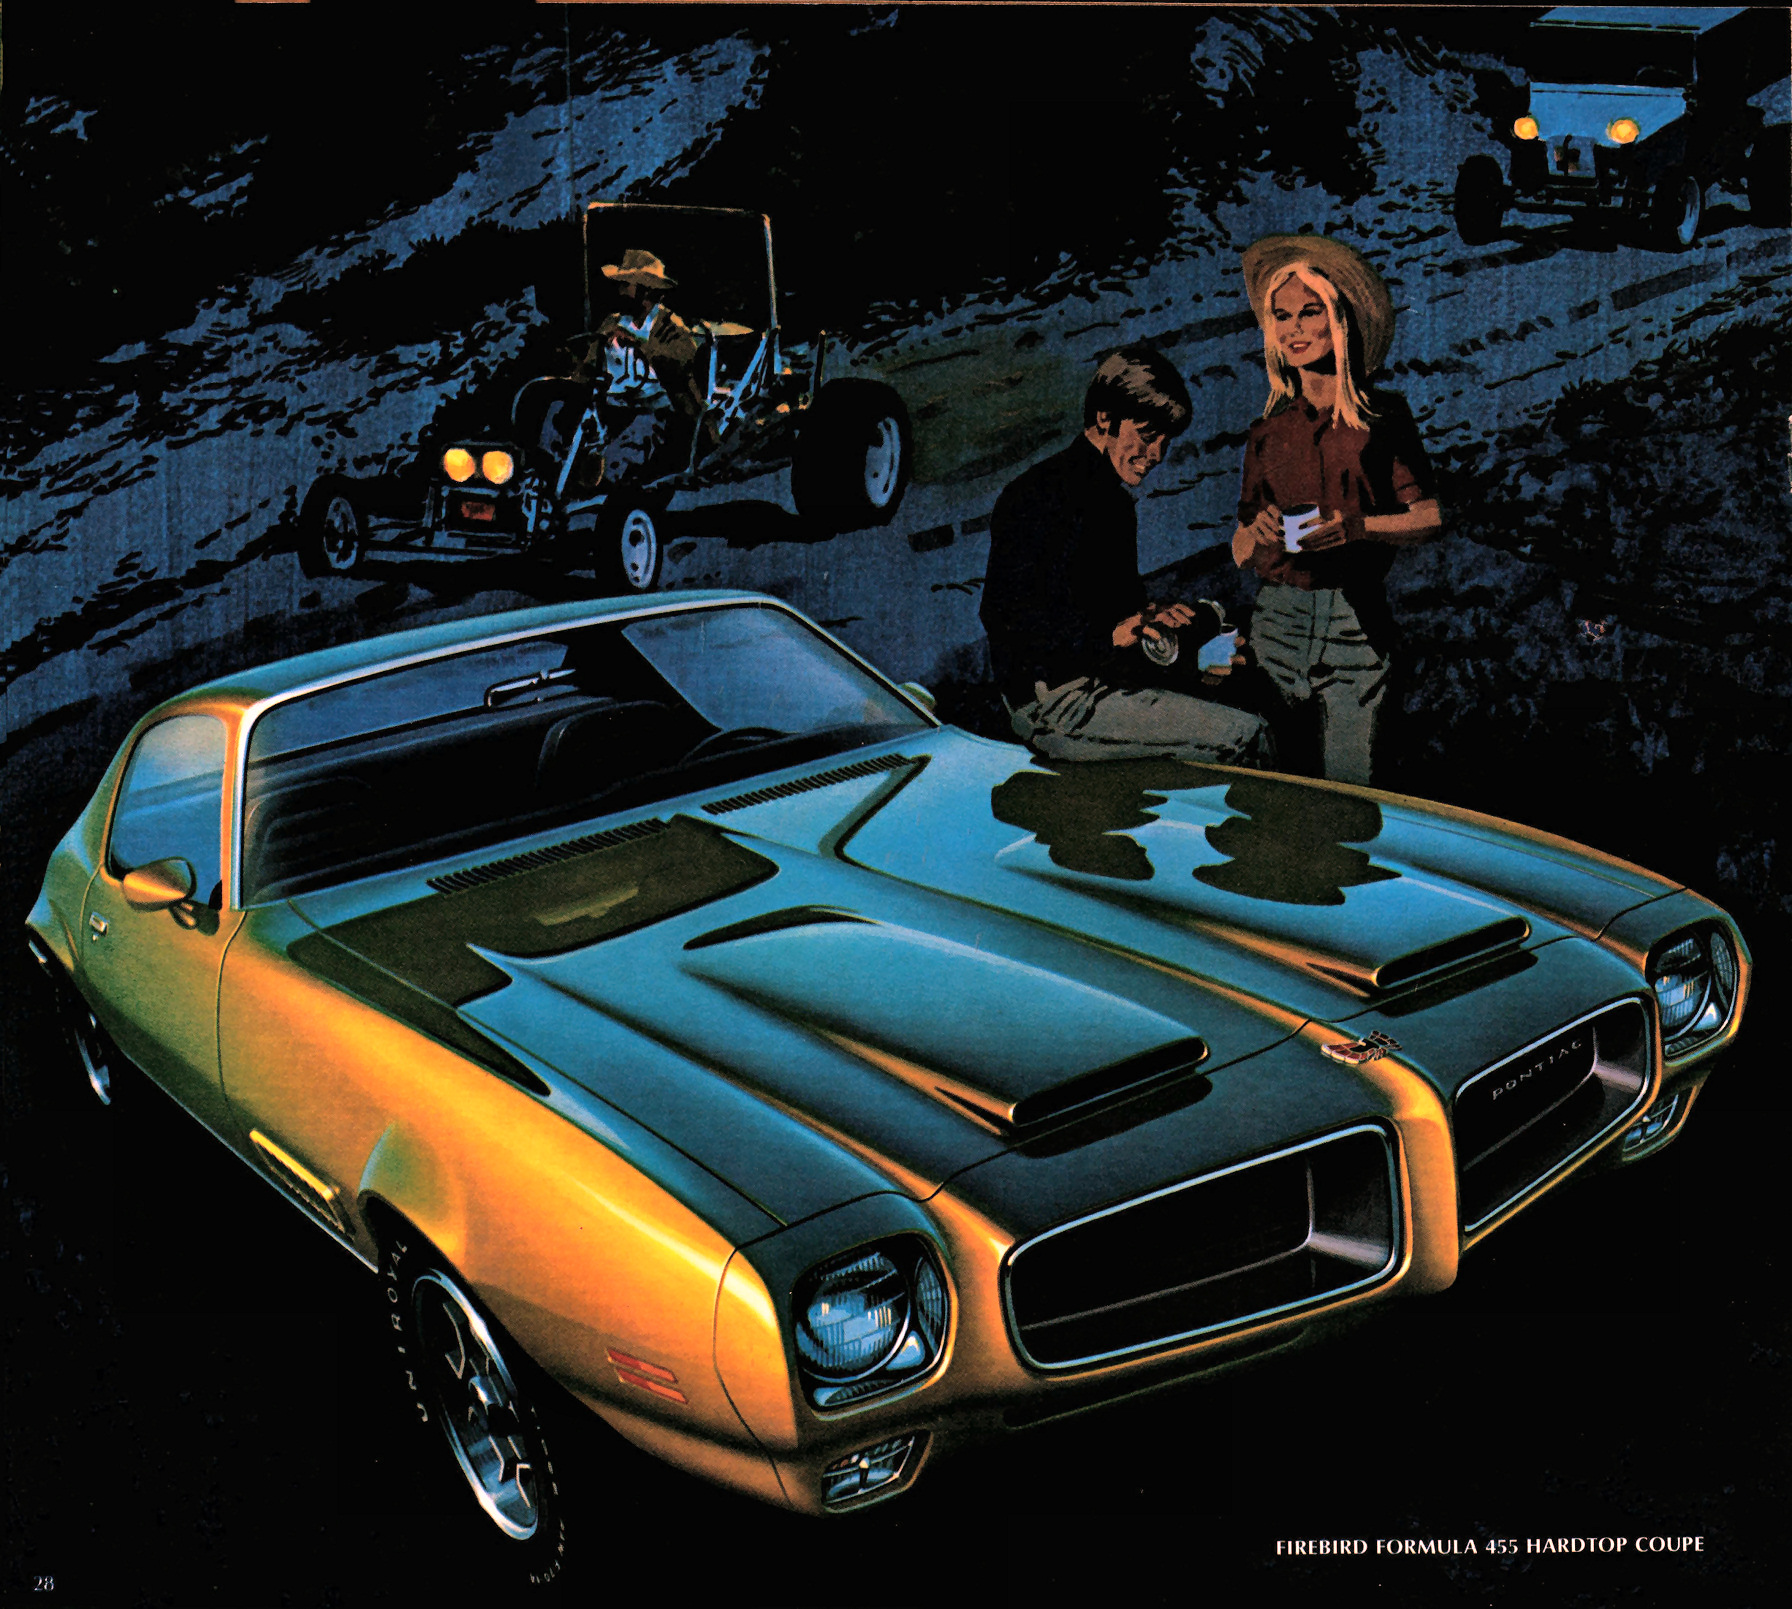 1971_Pontiac_Full_Line_Ptrestige-28